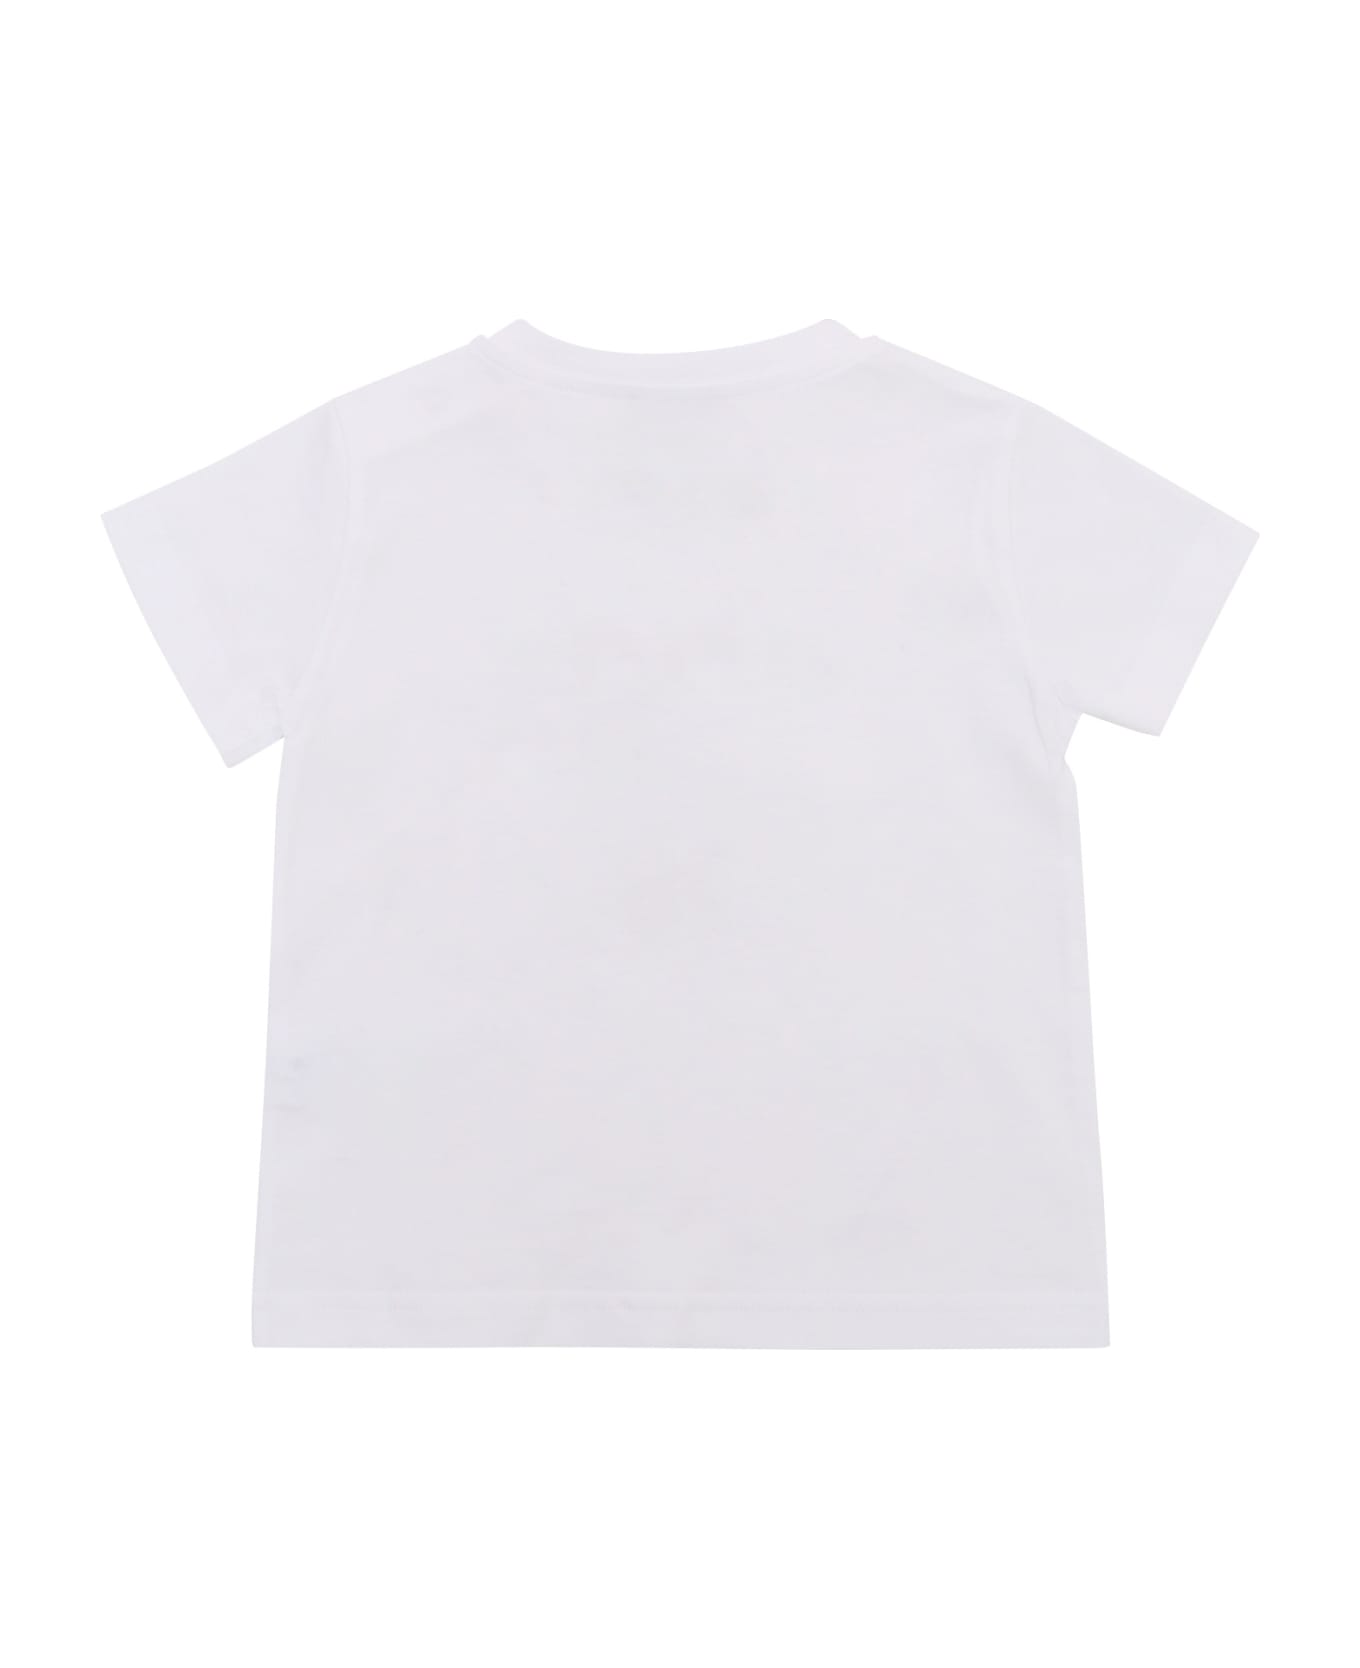 Il Gufo White T-shirt With Prints - WHITE